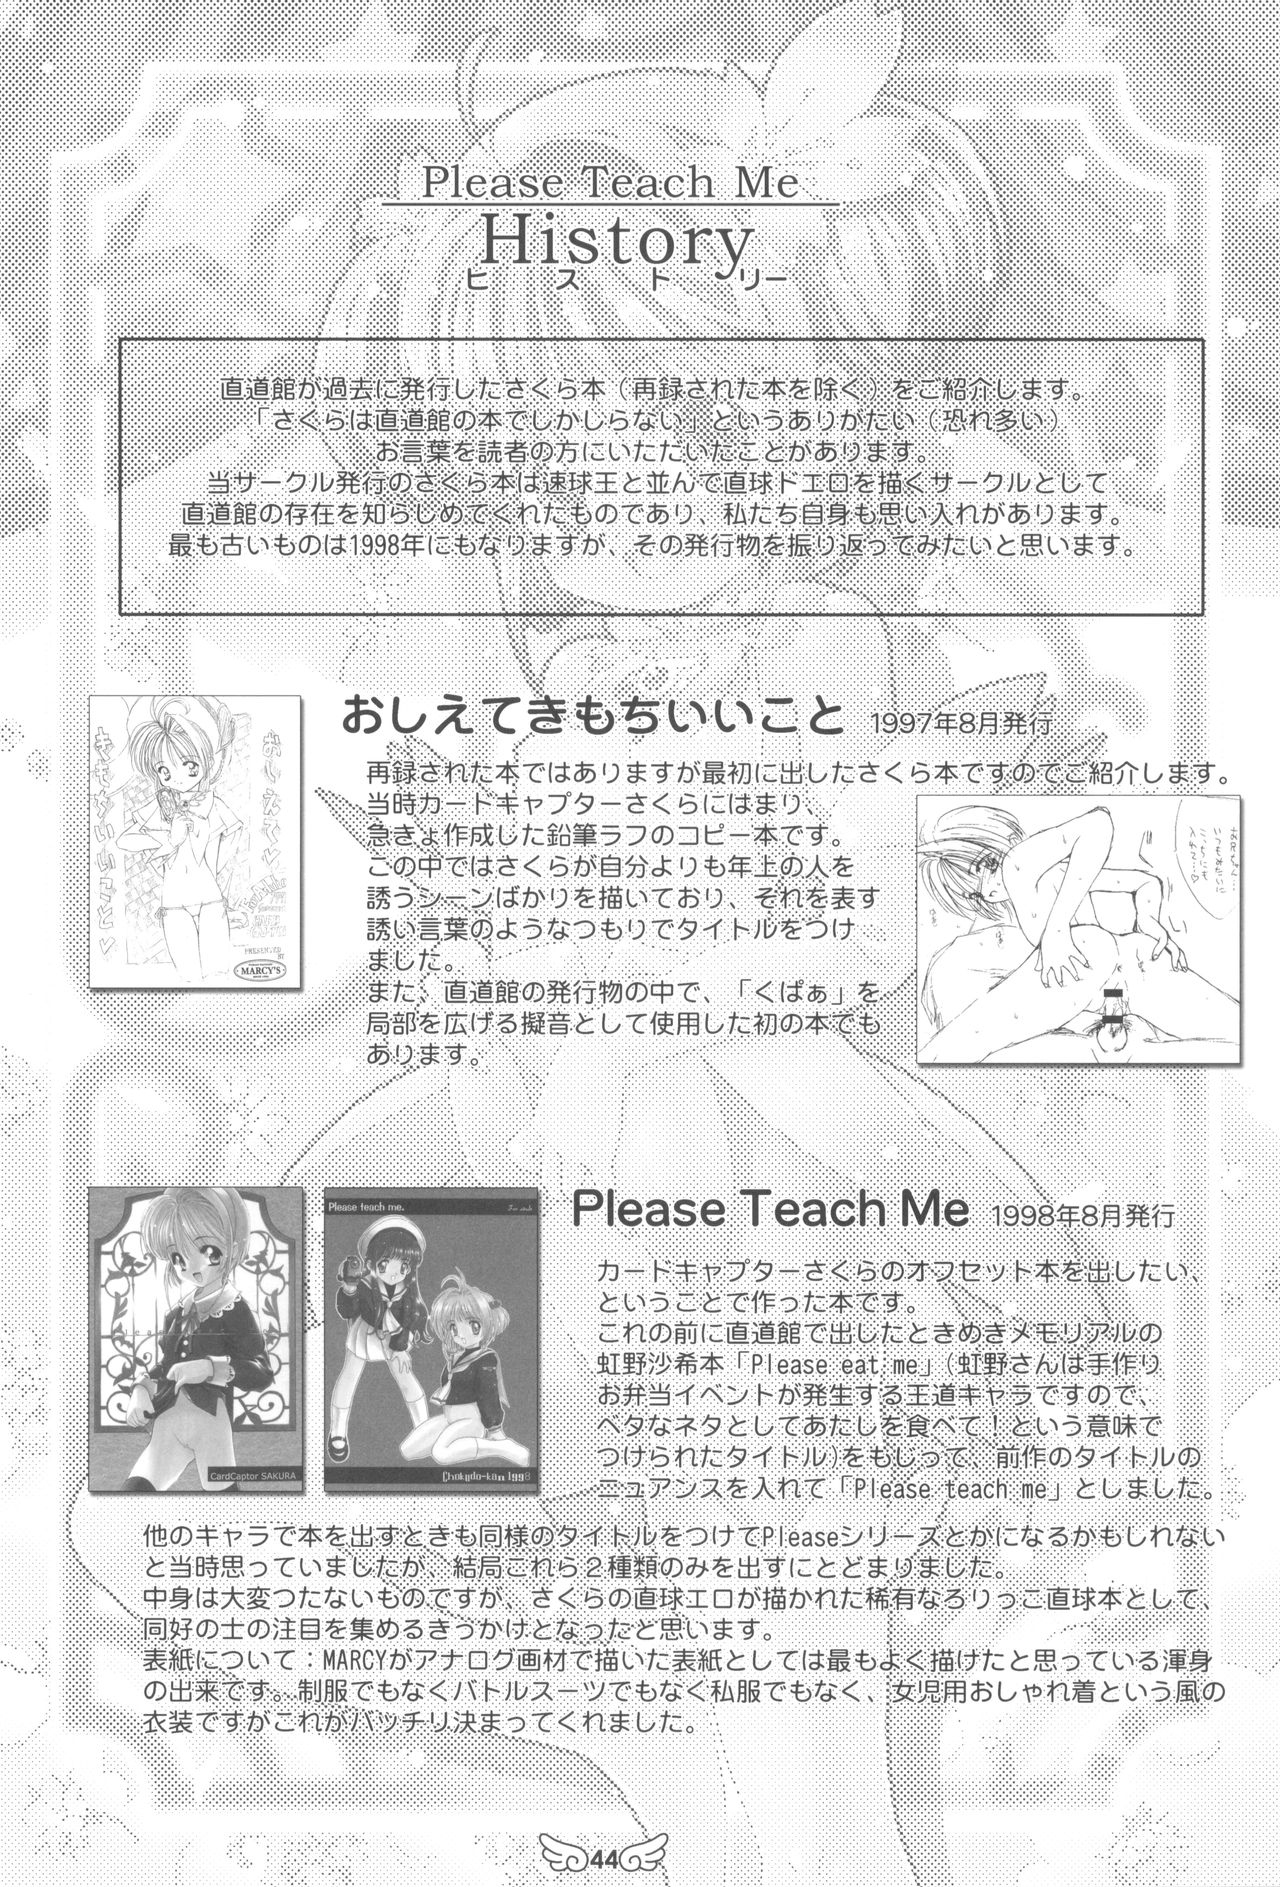 (C90) [直道館 (よろず)] Please Teach Me Platinum (カードキャプターさくら)